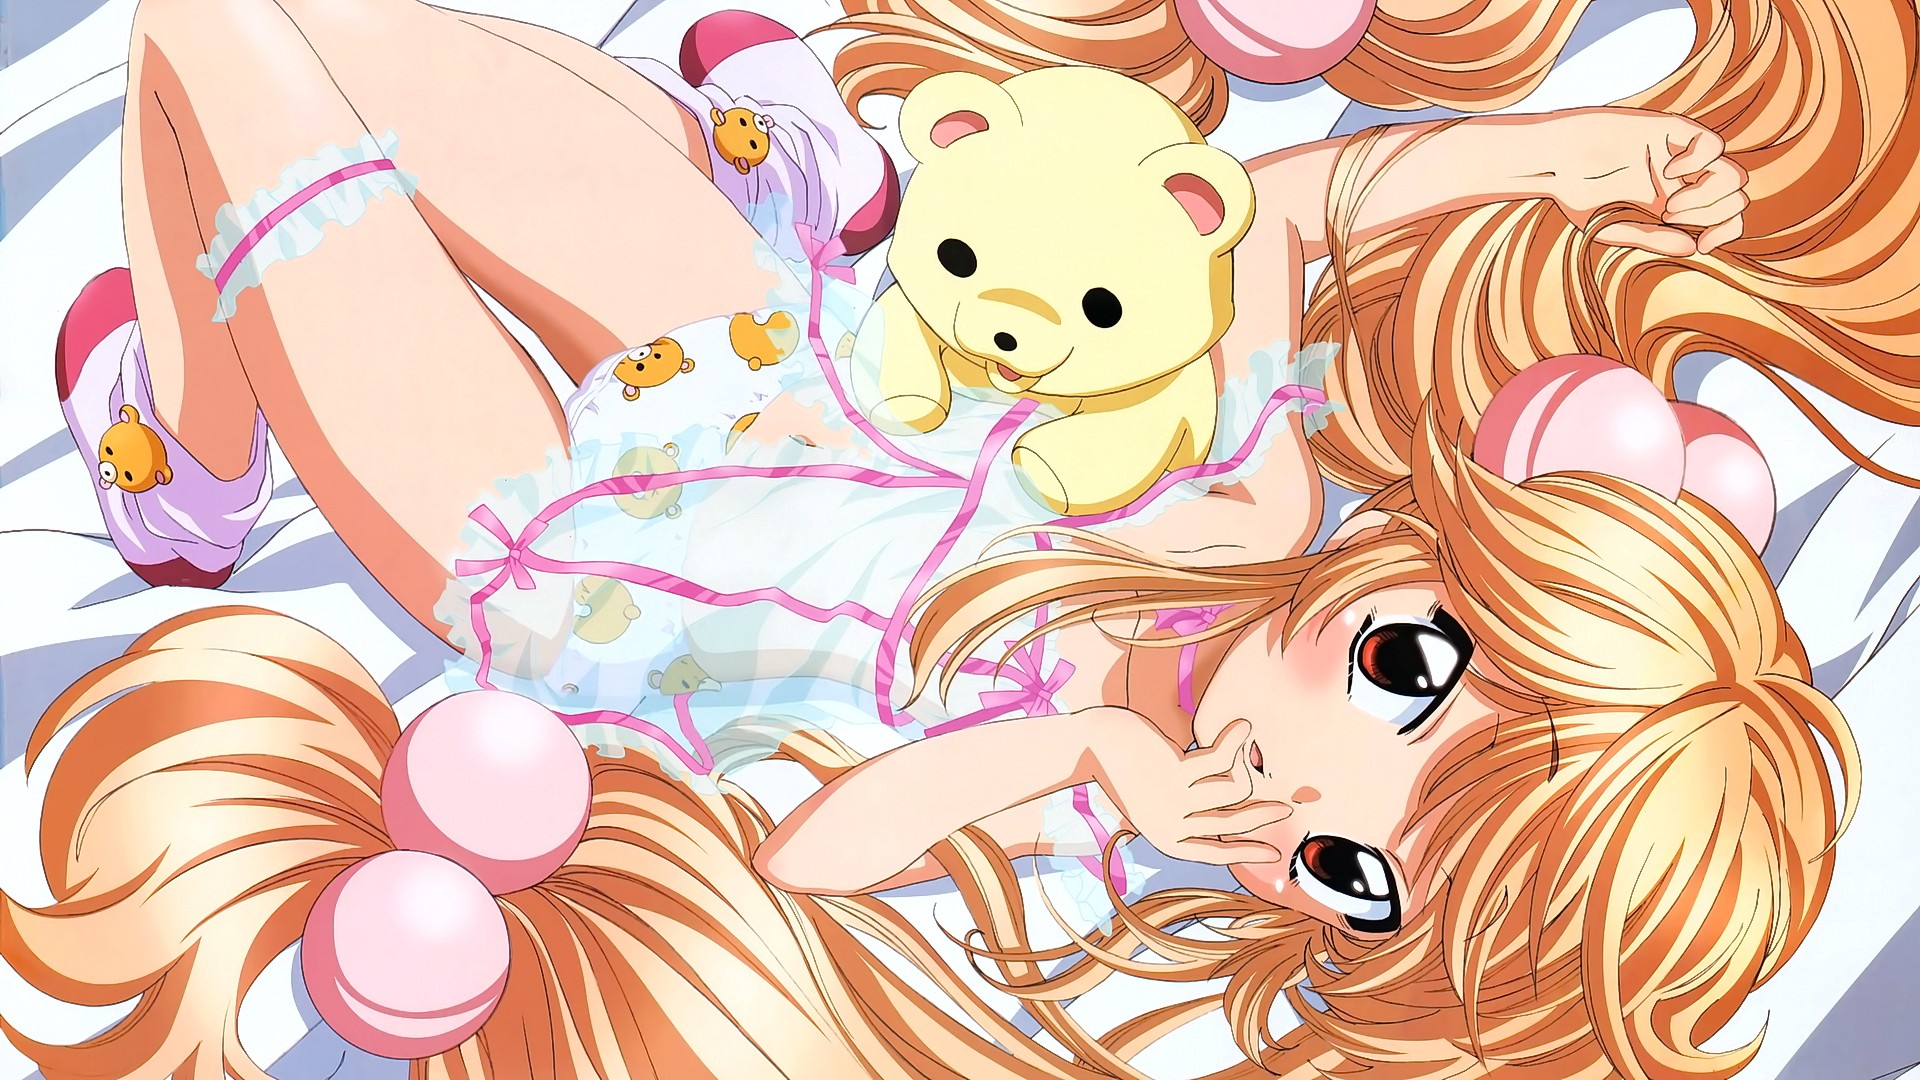 Anime 1920x1080 anime anime girls blonde long hair in bed panties underwear looking at viewer kodomo no jikan Rin Kokonoe knees together thighs plush toy face red eyes